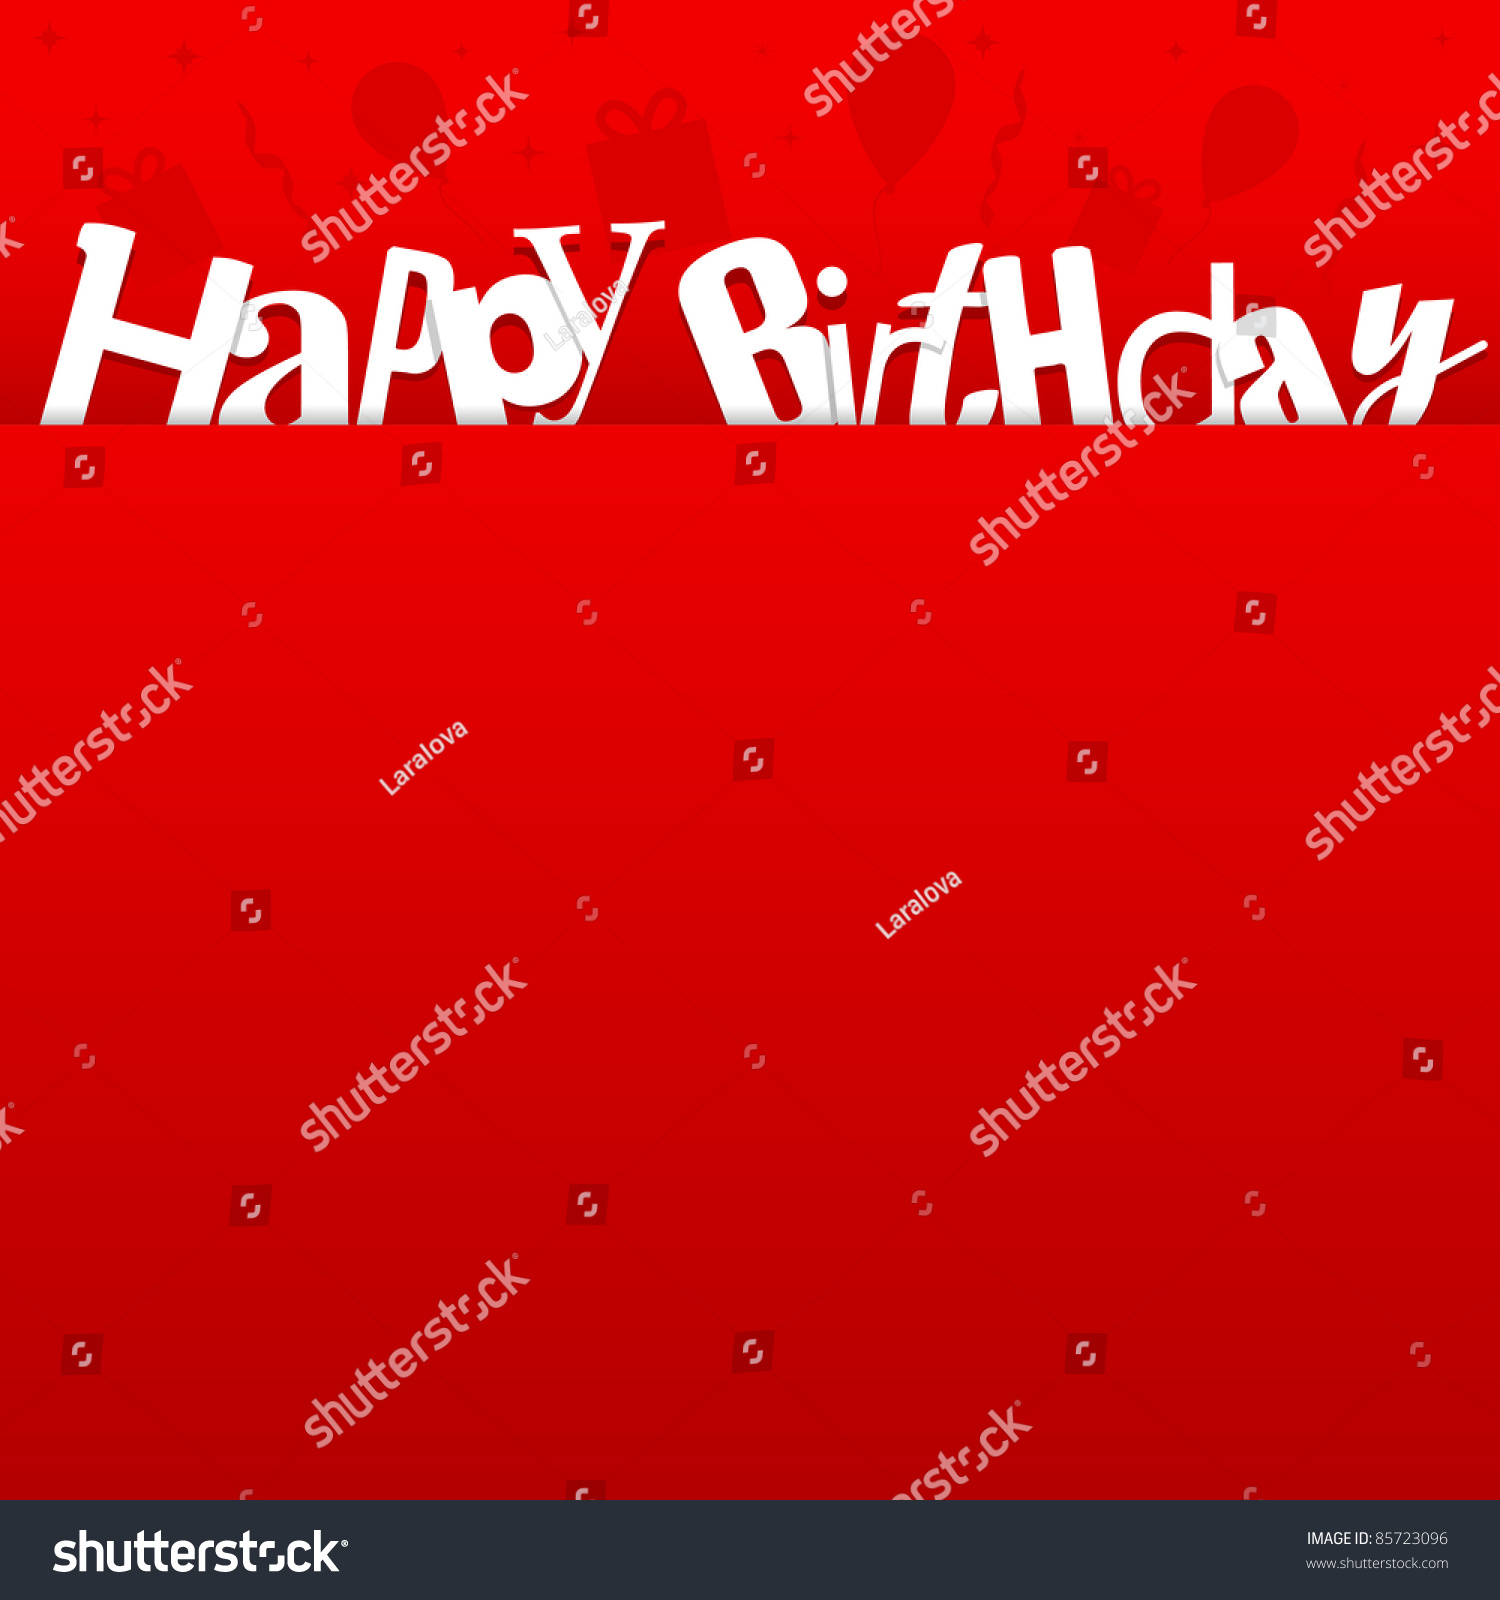 Illustration For Happy Birthday Card. Vector. - 85723096 : Shutterstock